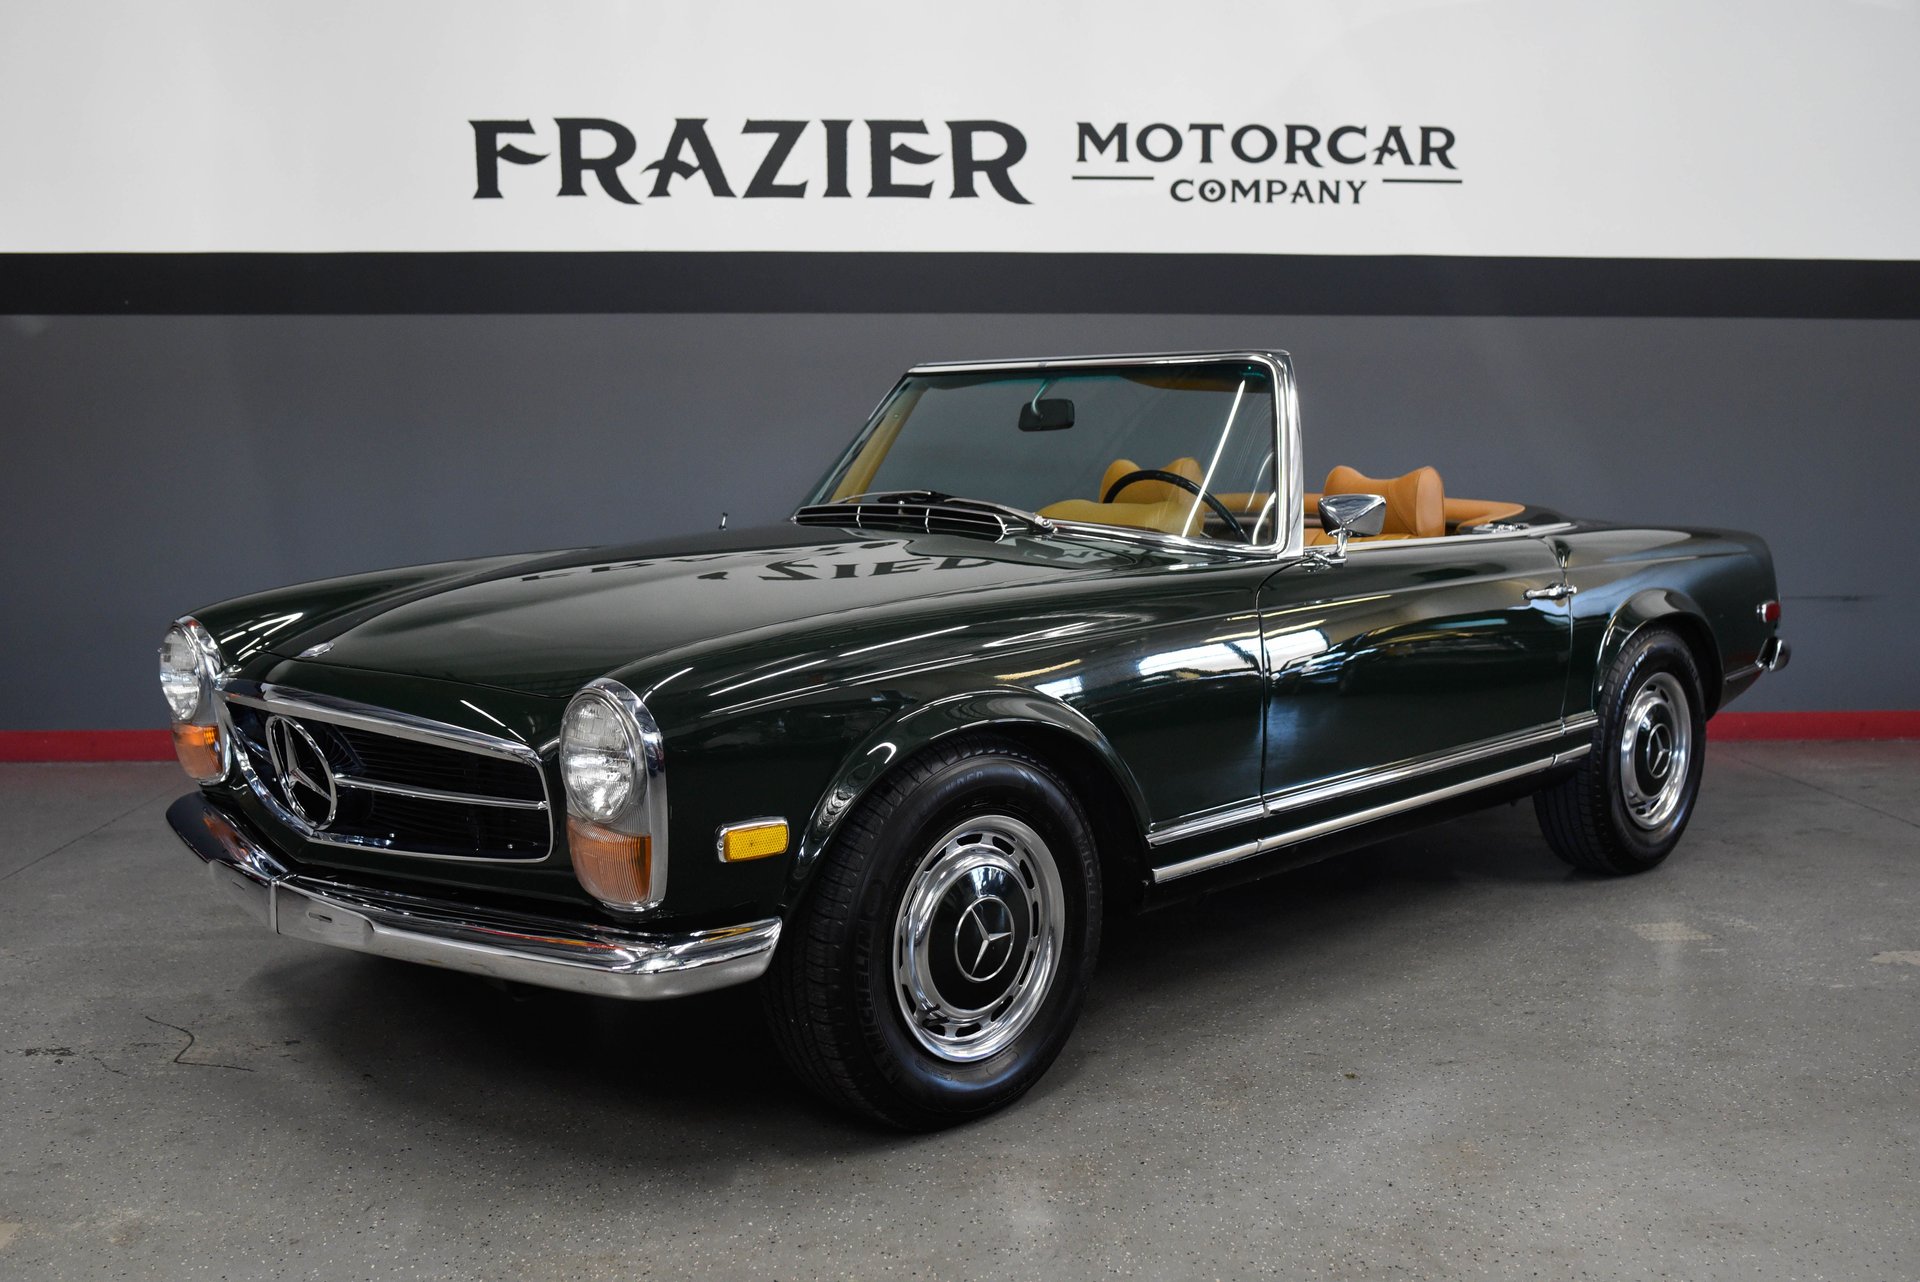 1970 Mercedes-Benz 280SL | Frazier Motorcar Company